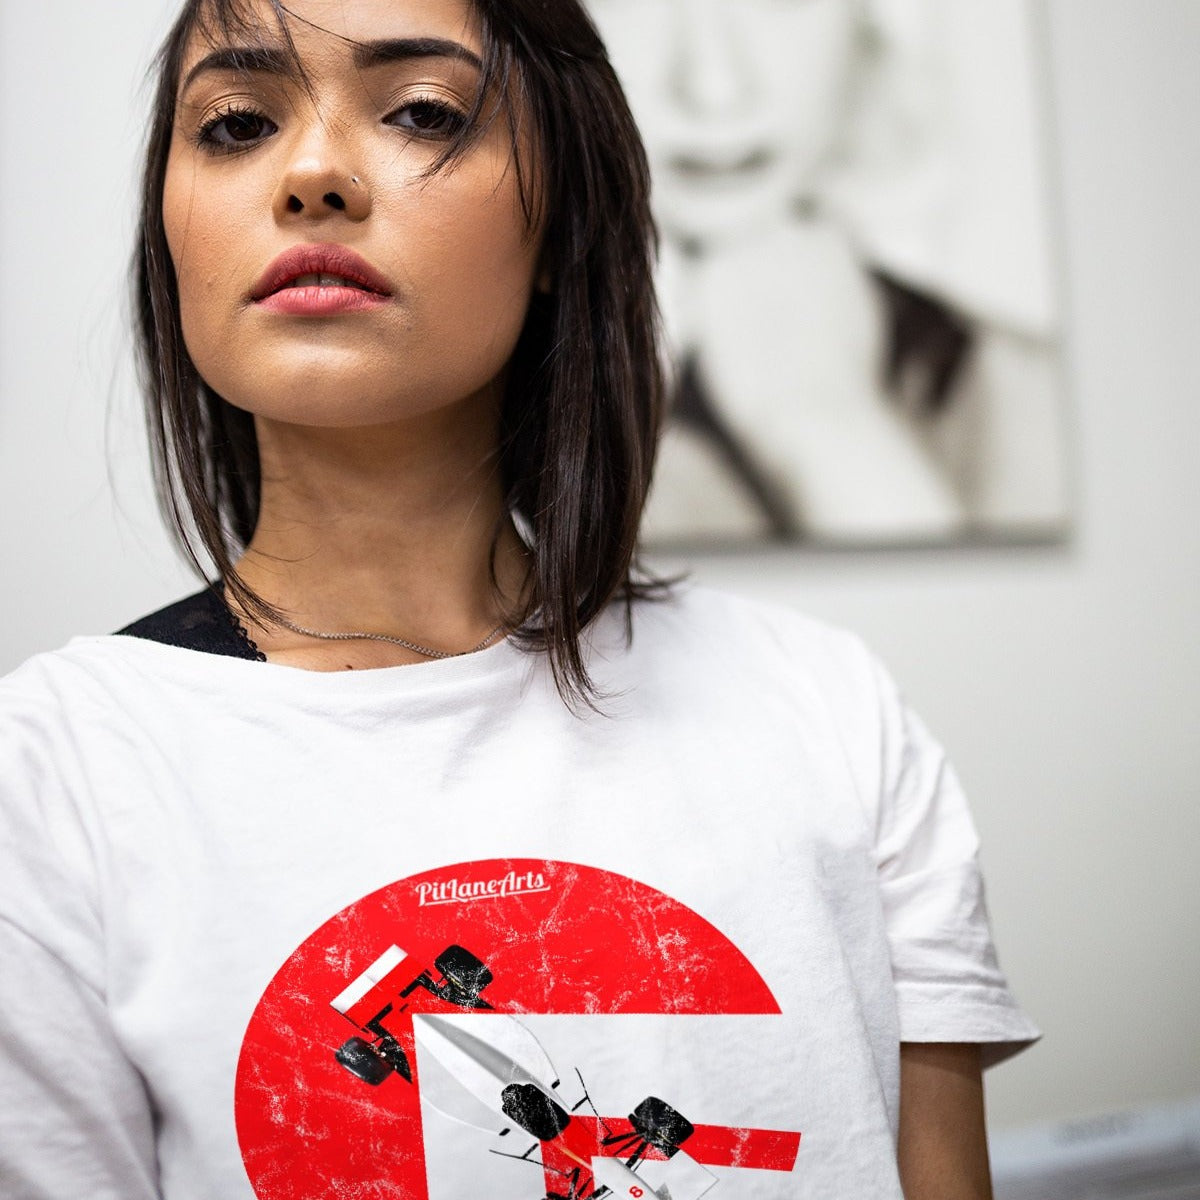 Girl wearing a white Ayrton Senna Race car T-shirt - PitLaneArts